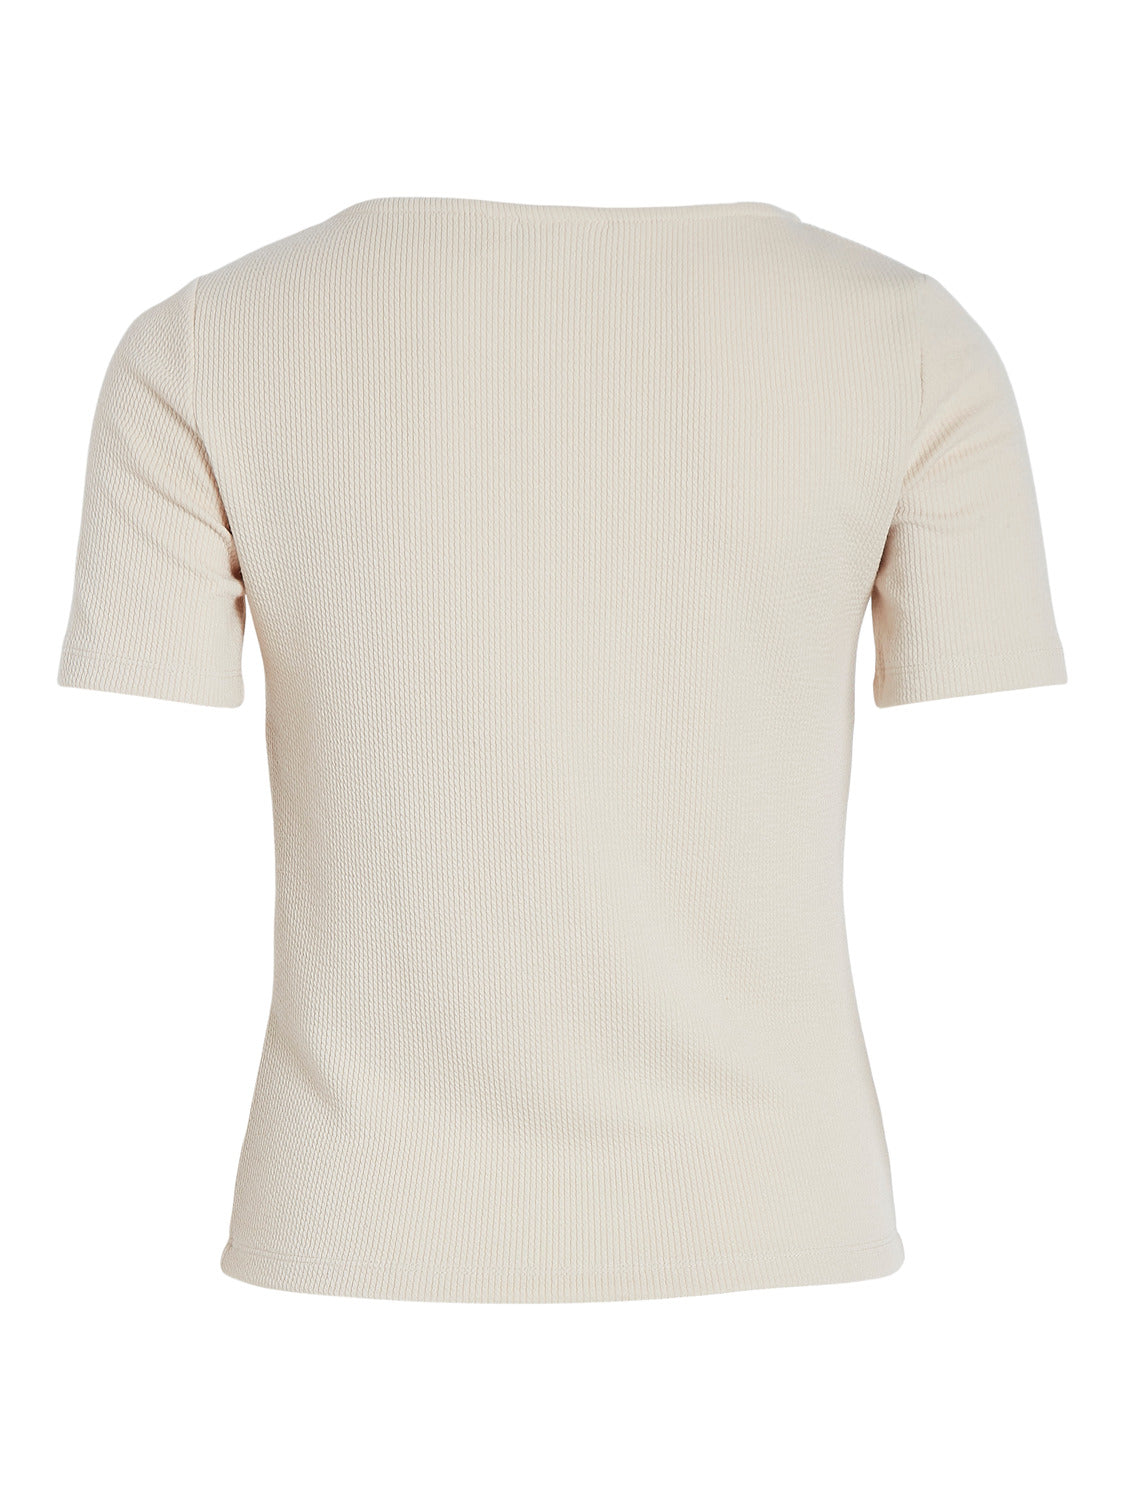 VIBRINKE T-Shirts & Tops - Birch